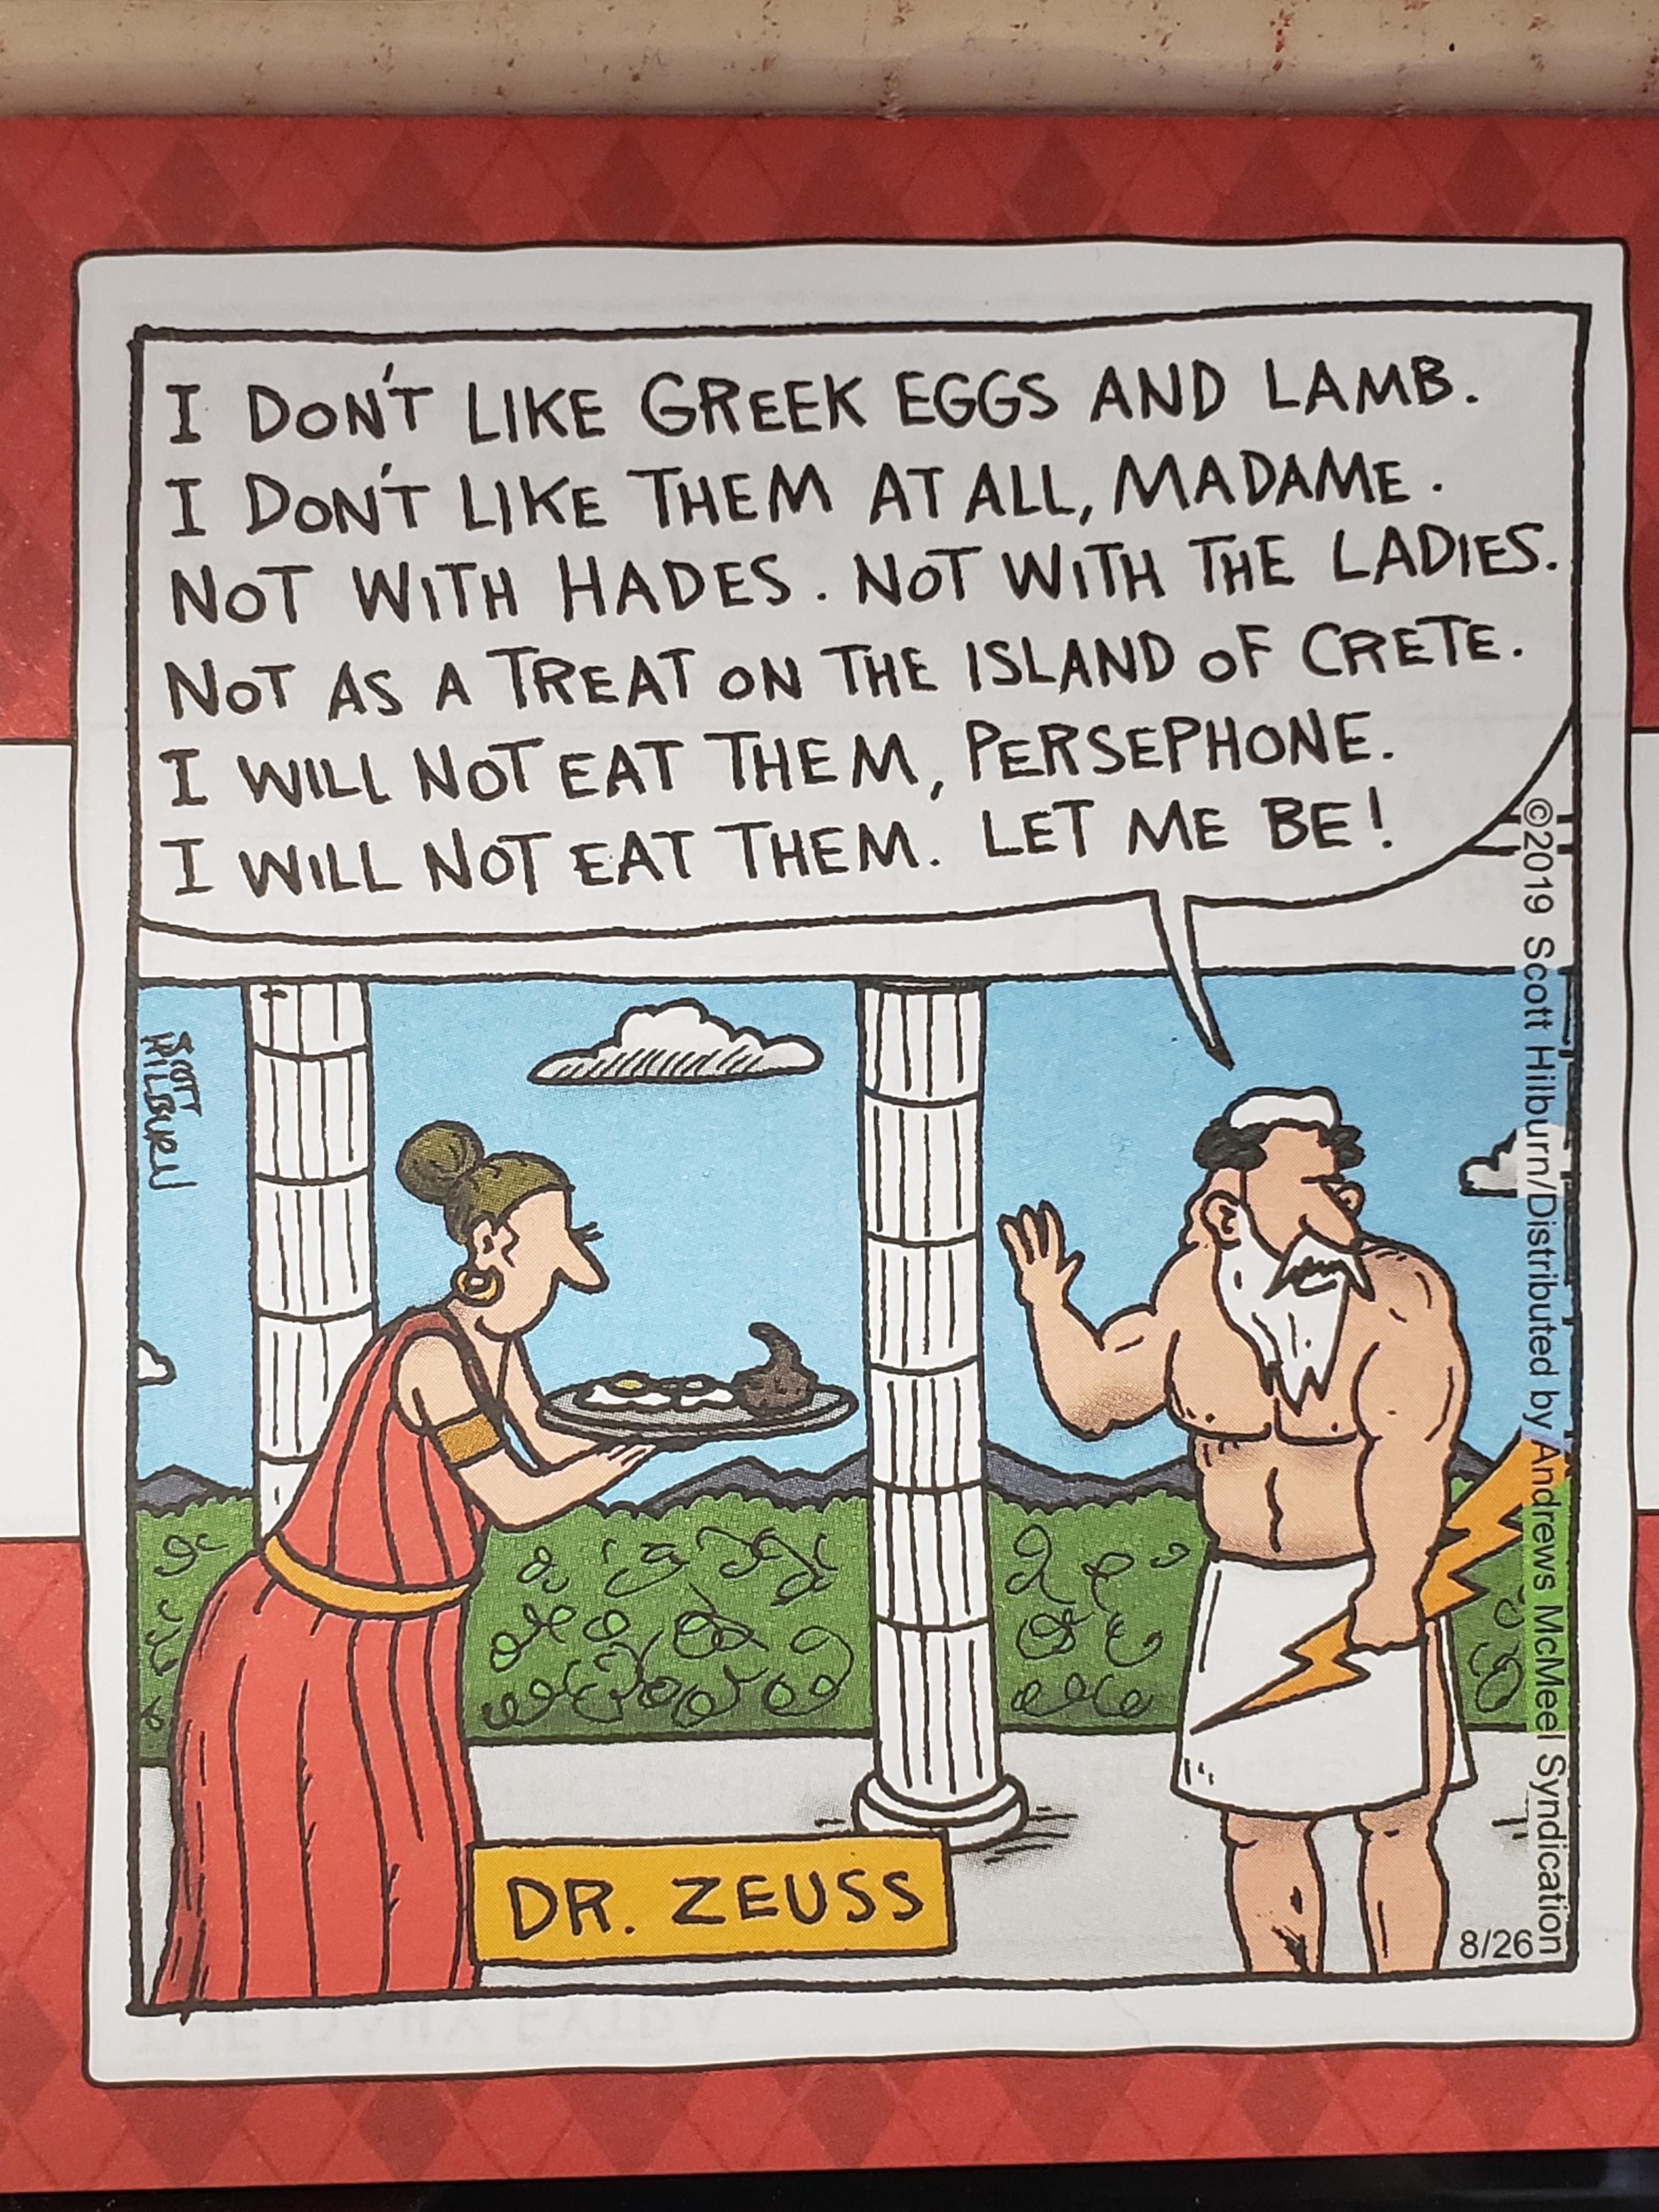 Dr Zeuss, mythological children's author